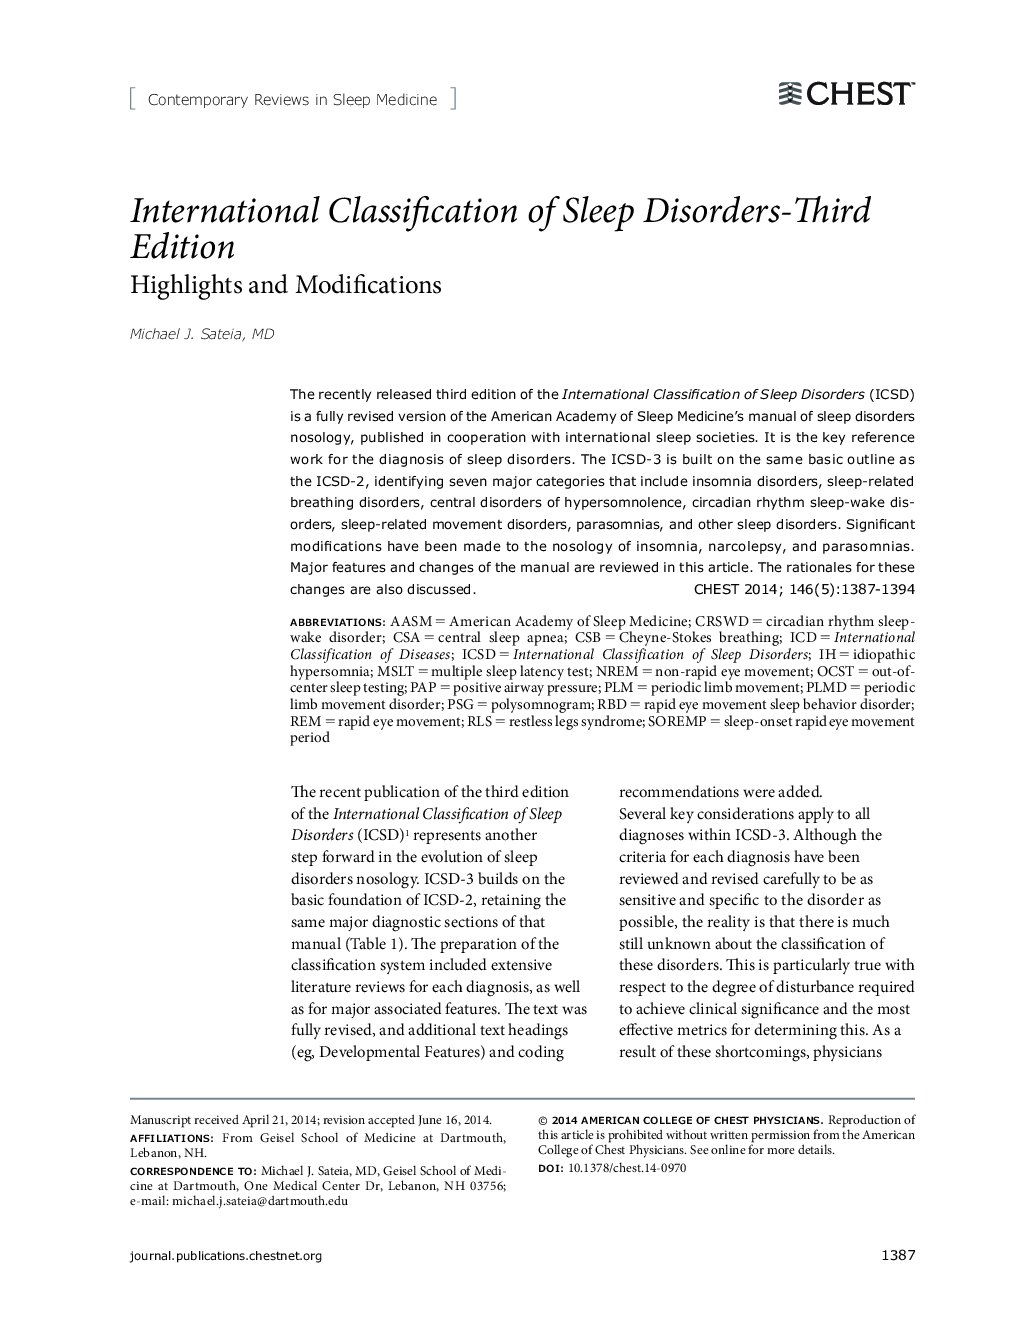 Contemporary Reviews in Sleep MedicineInternational Classification of Sleep Disorders-Third Edition